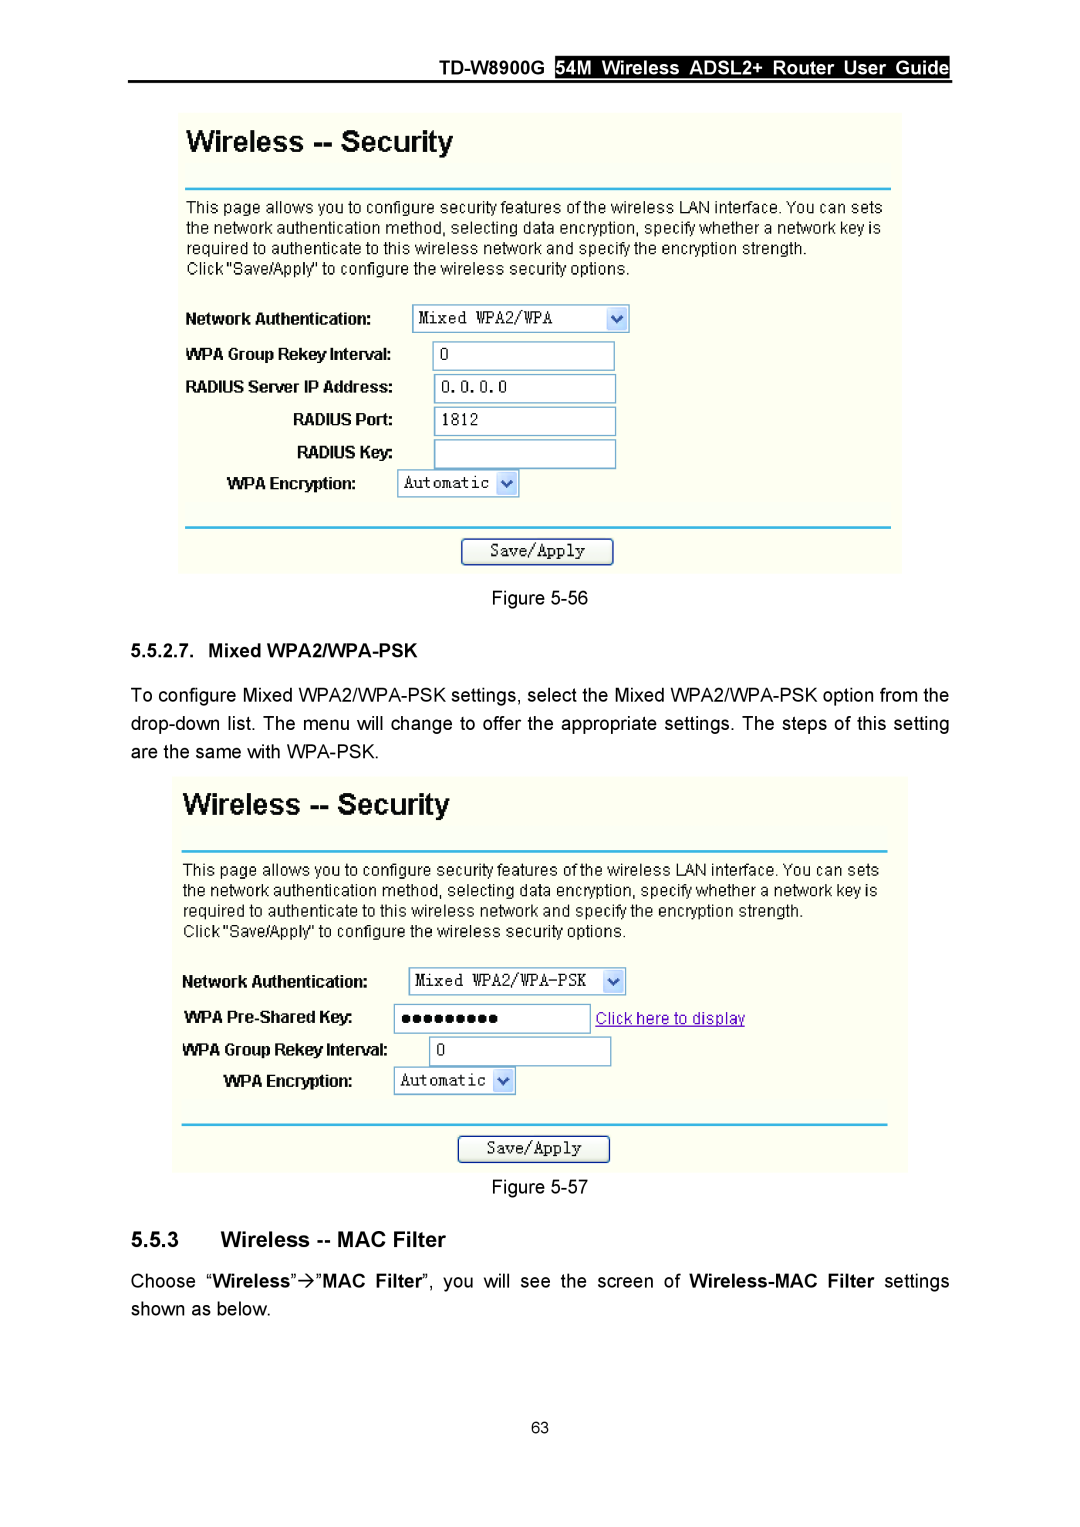 TP-Link manual Wireless -- MAC Filter, TD-W8900G 54M Wireless ADSL2+ Router User Guide, Mixed WPA2/WPA-PSK 